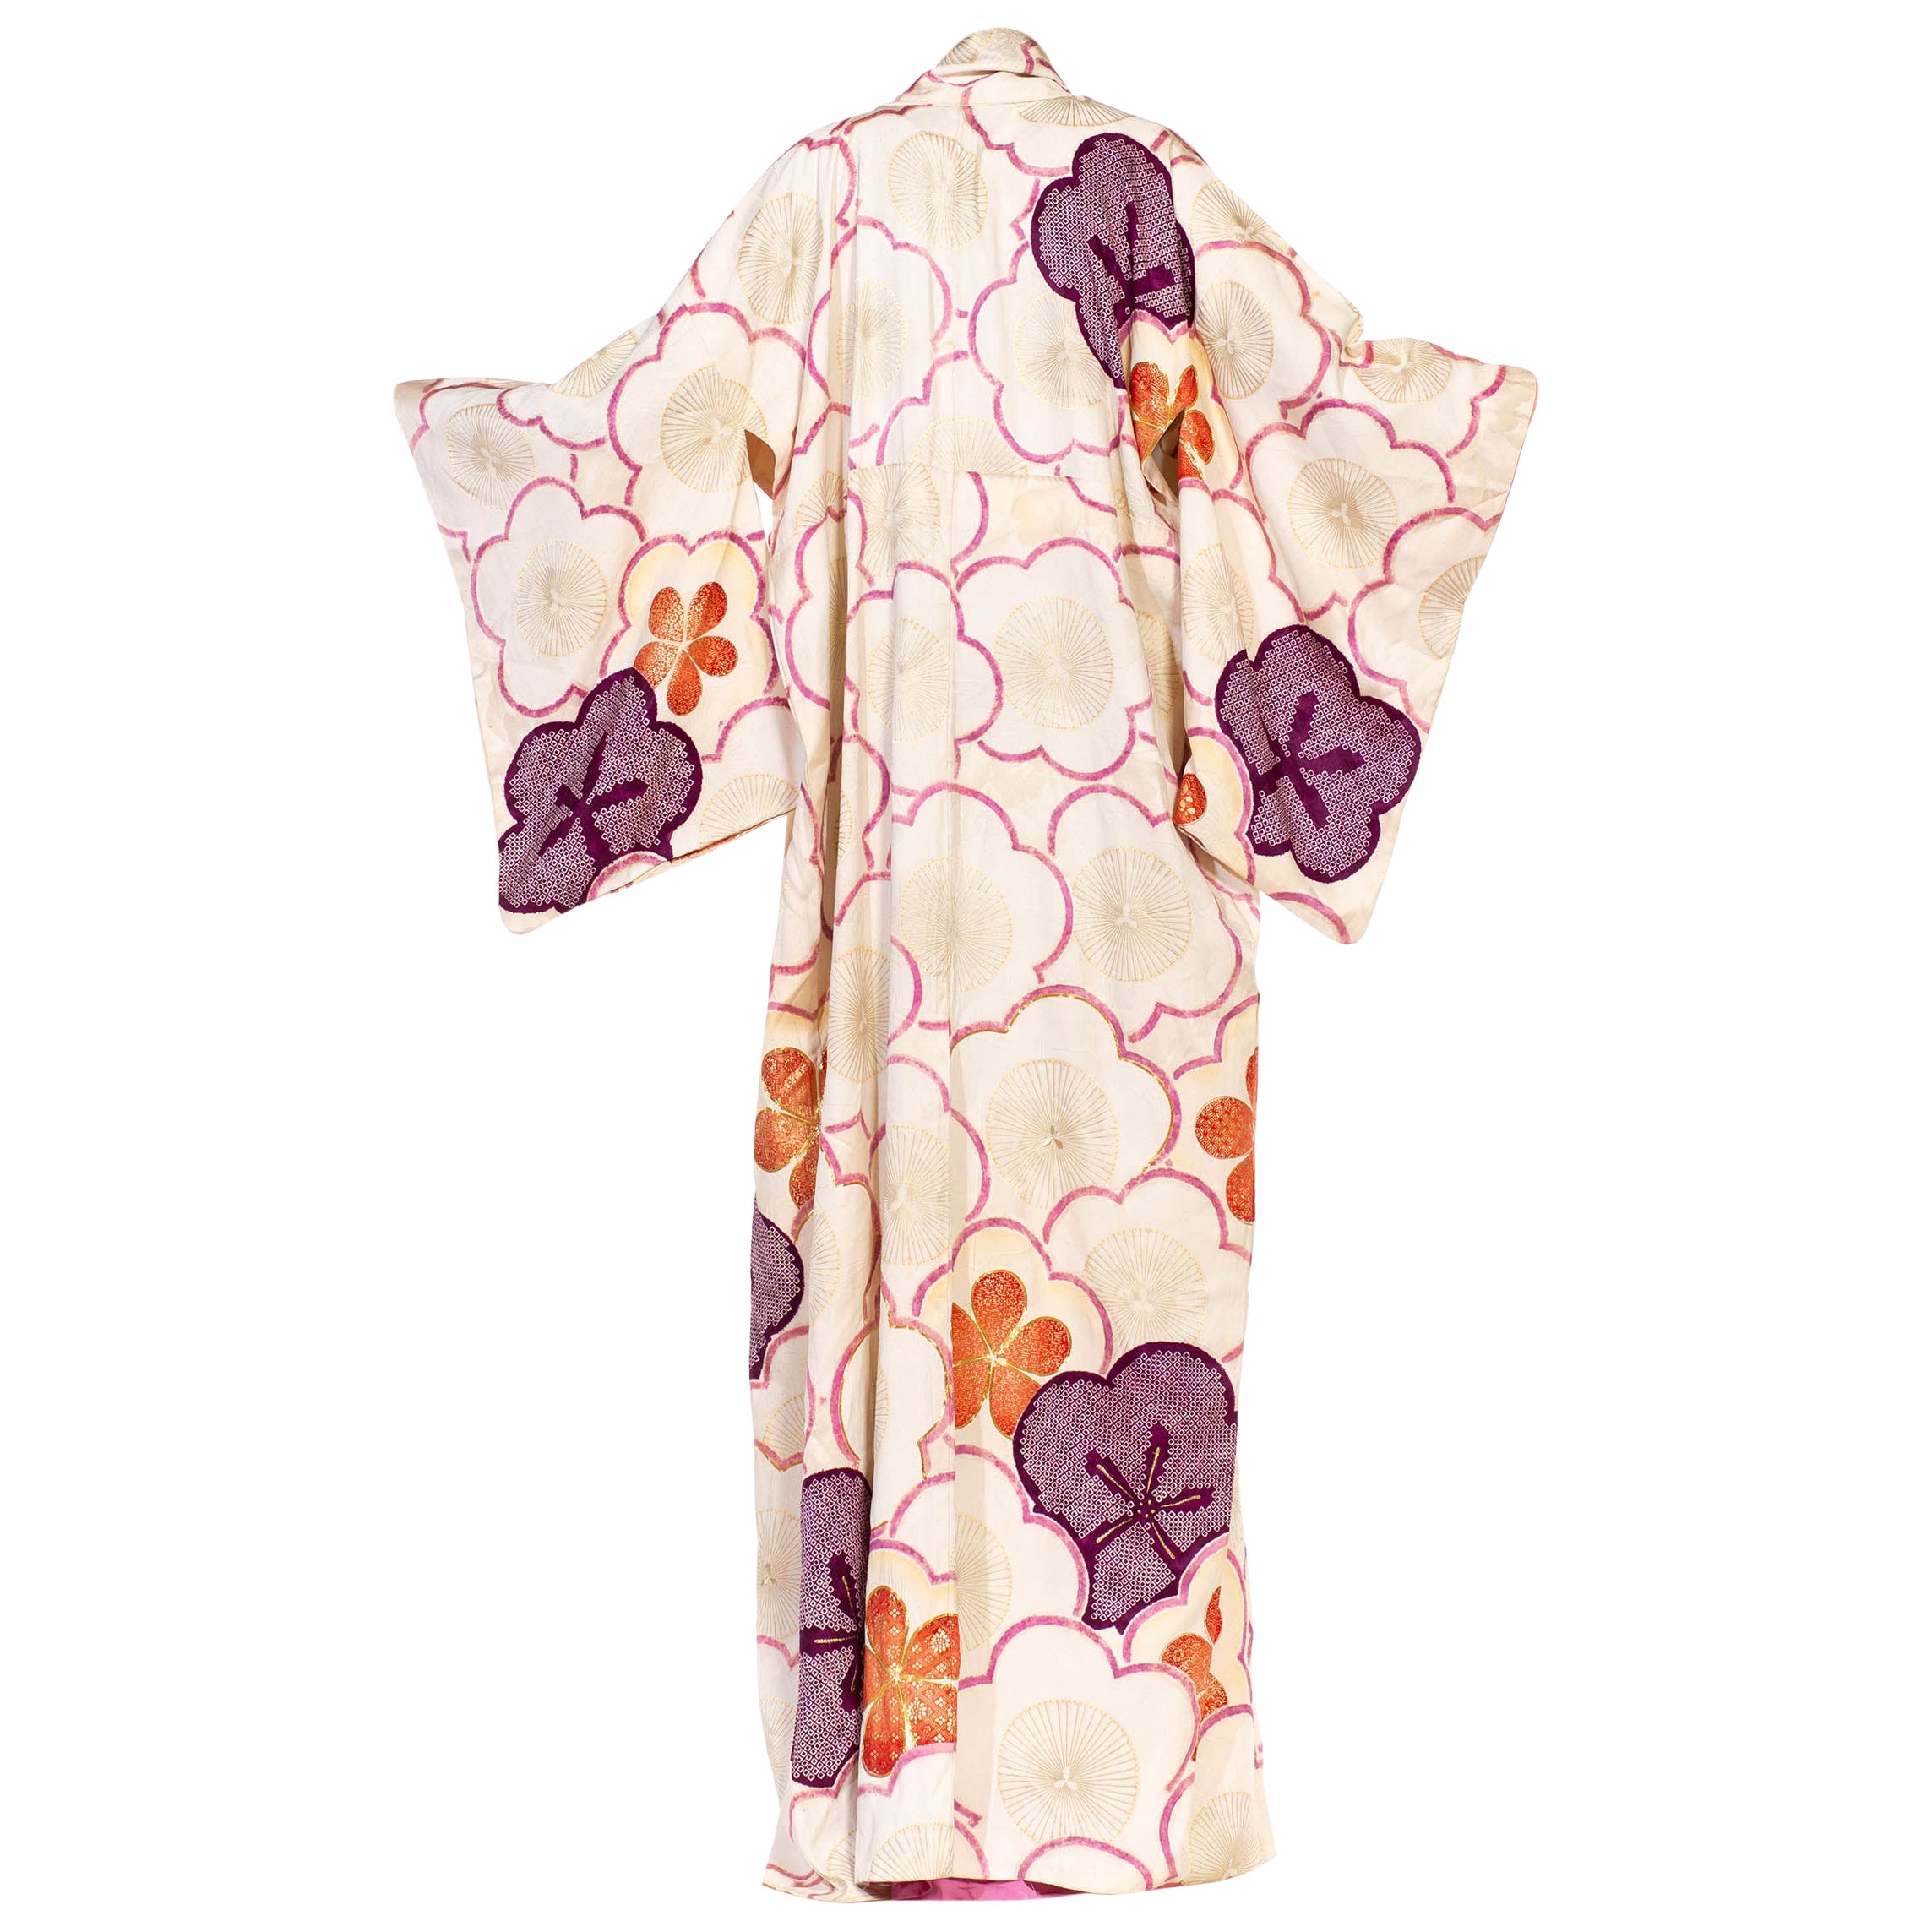 1950s periwinkle silk kimono with white lily pattern